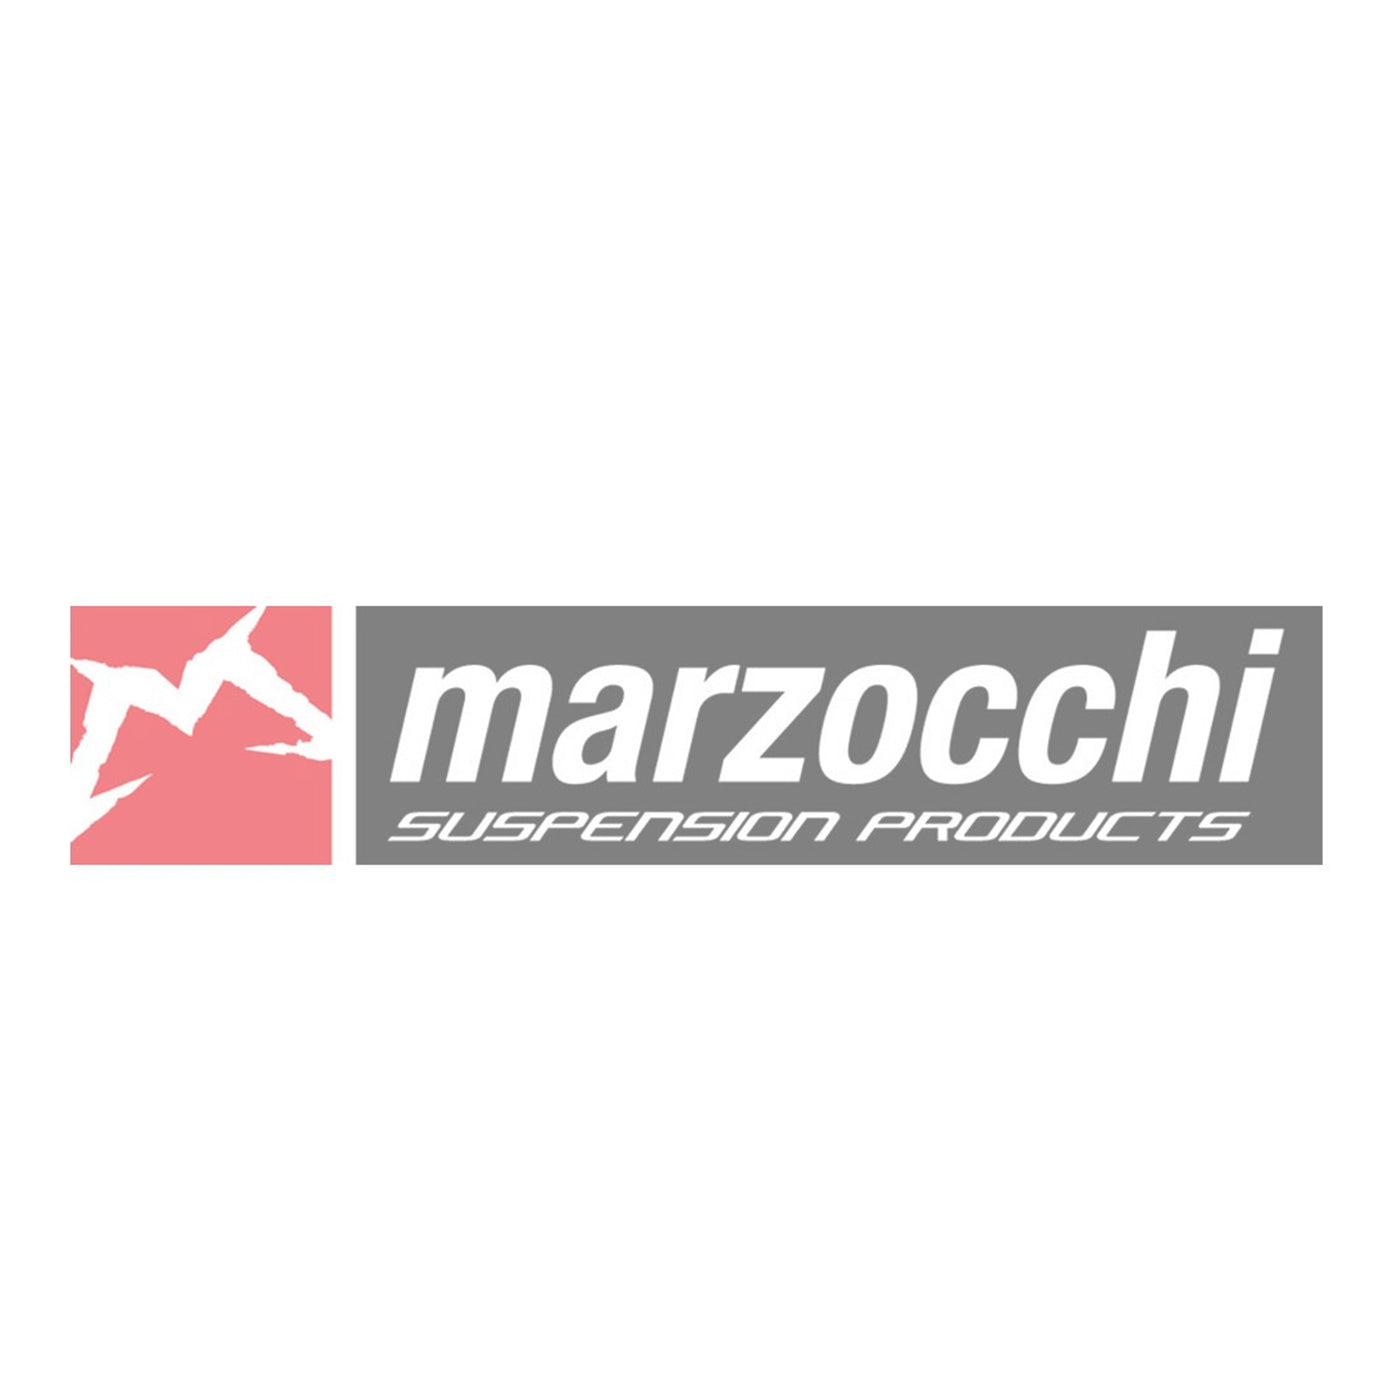 Marzocchi shock service tools